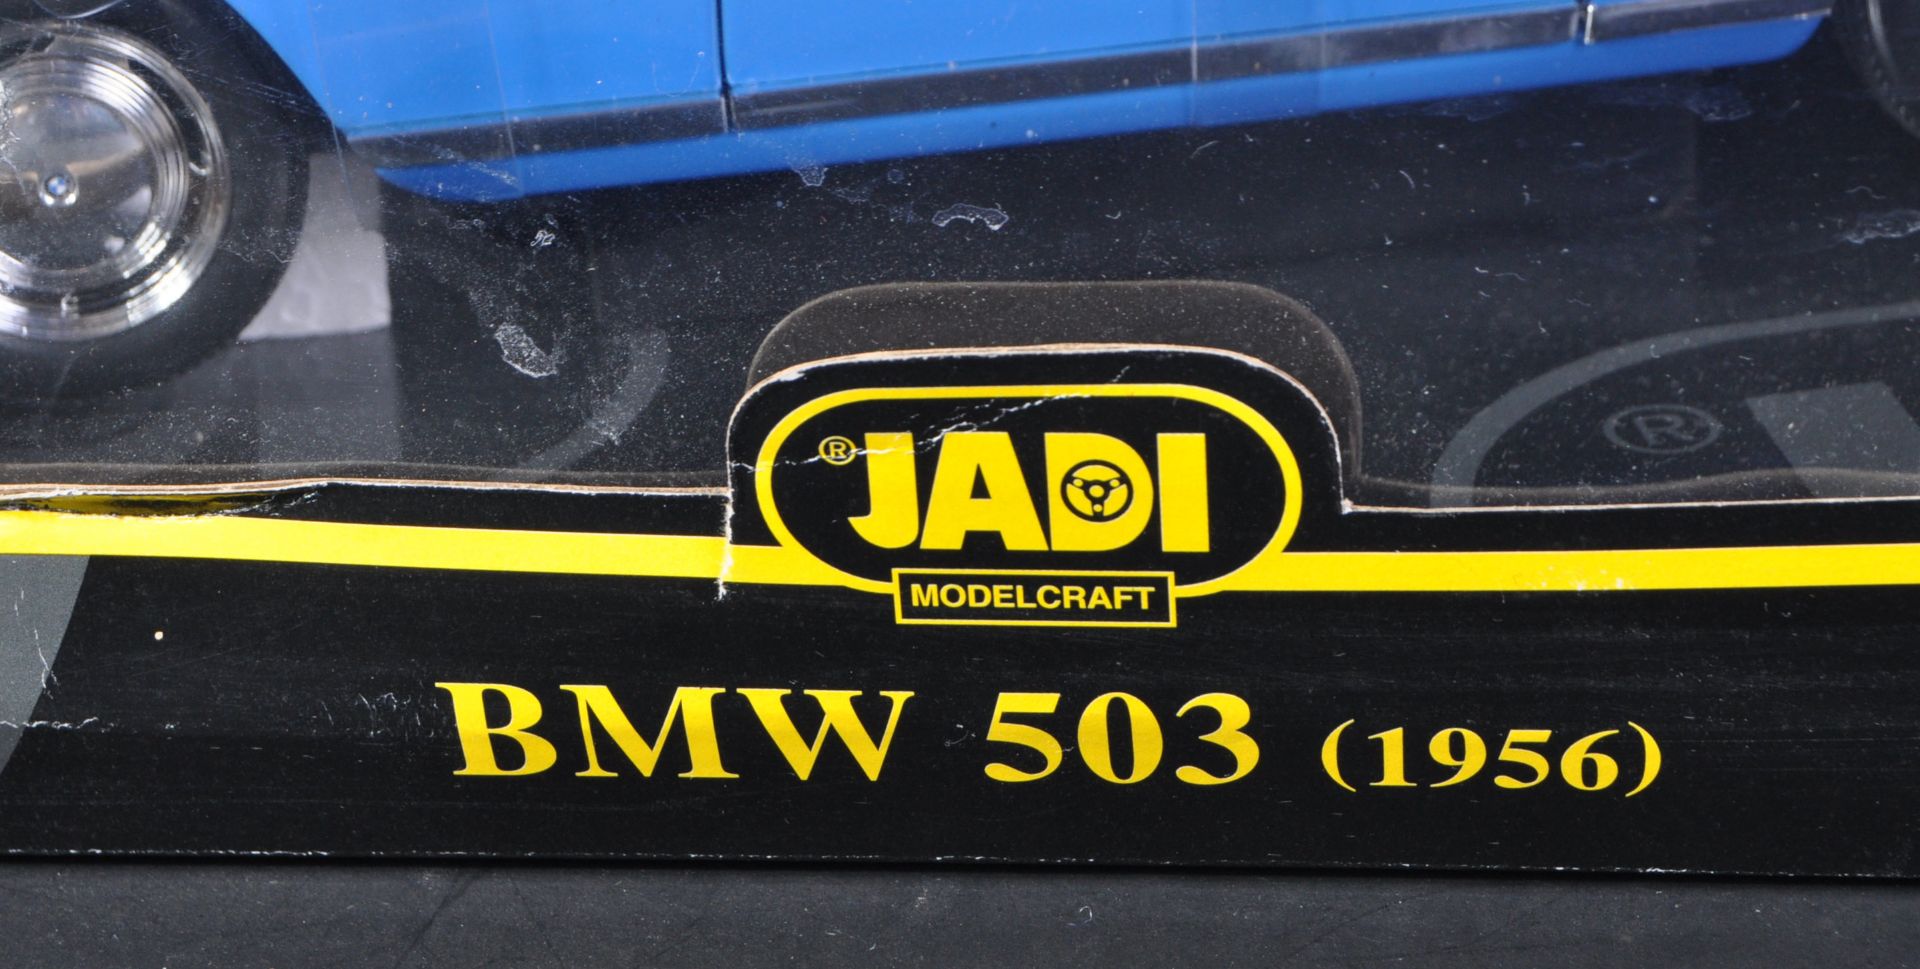 ORIGINAL JADI MODEL CRAFT 1/18 SCALE DIECAST MODEL BMW 503 COUPE - Image 4 of 5